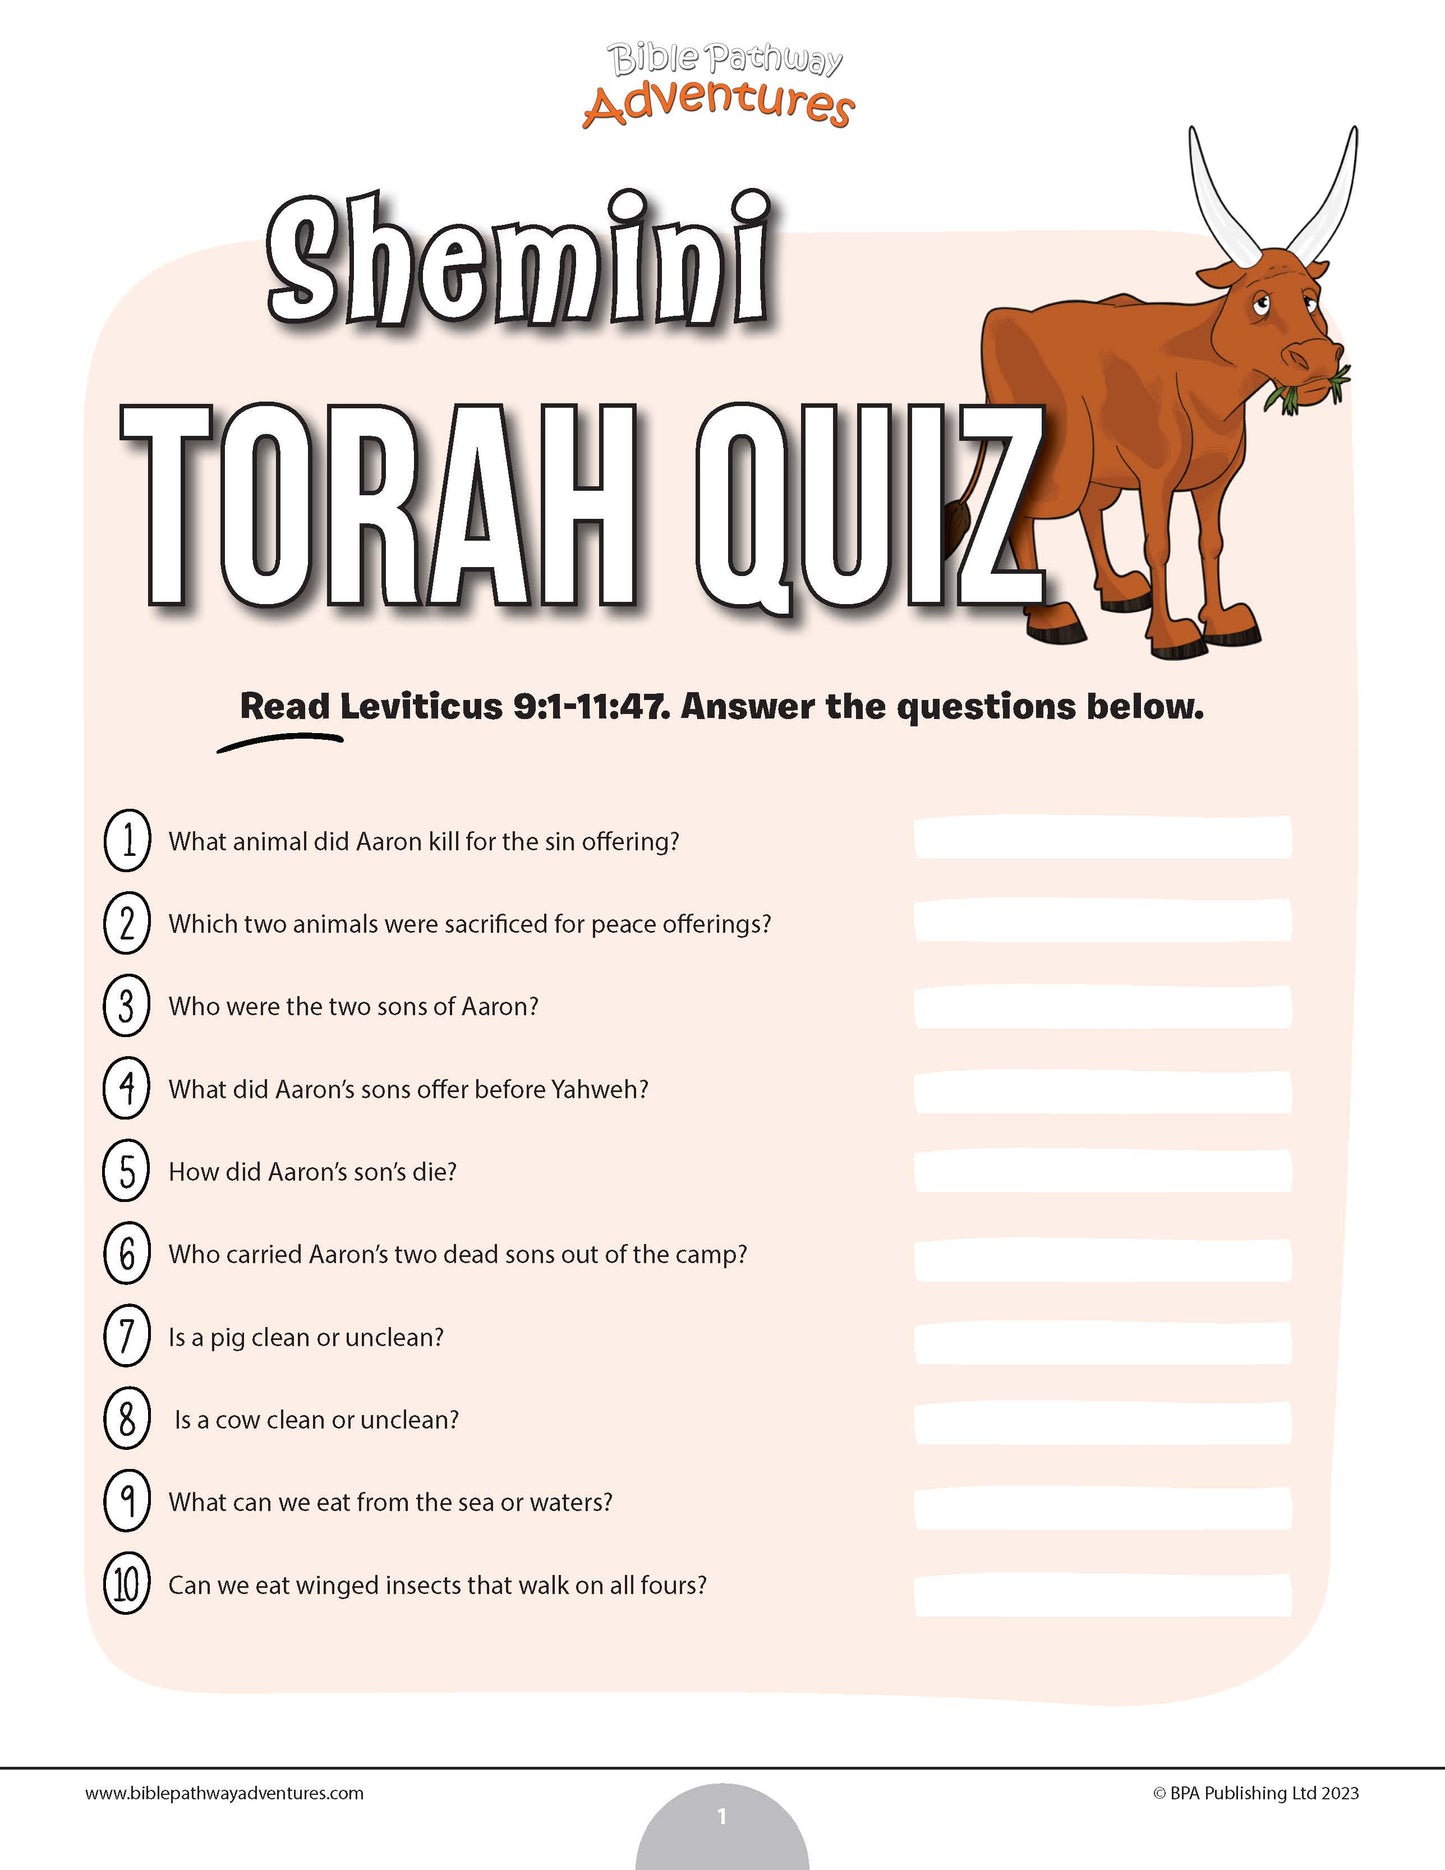 Shemini Torah quiz (PDF)